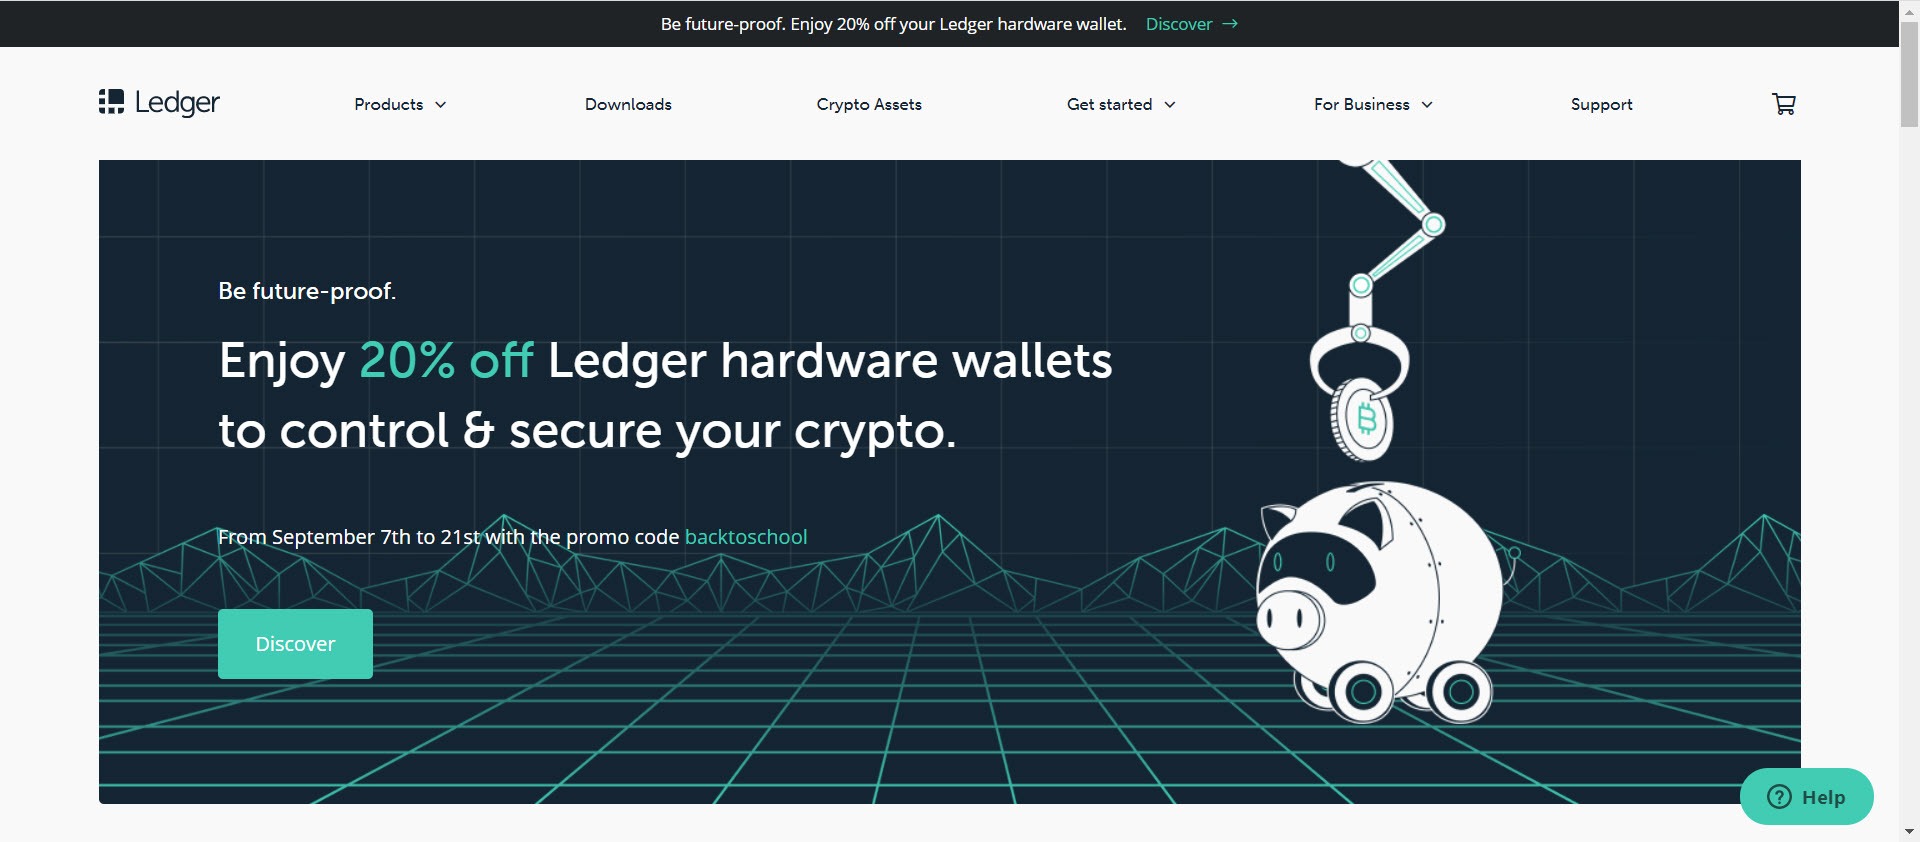 Crypto affiliate programs - Ledger